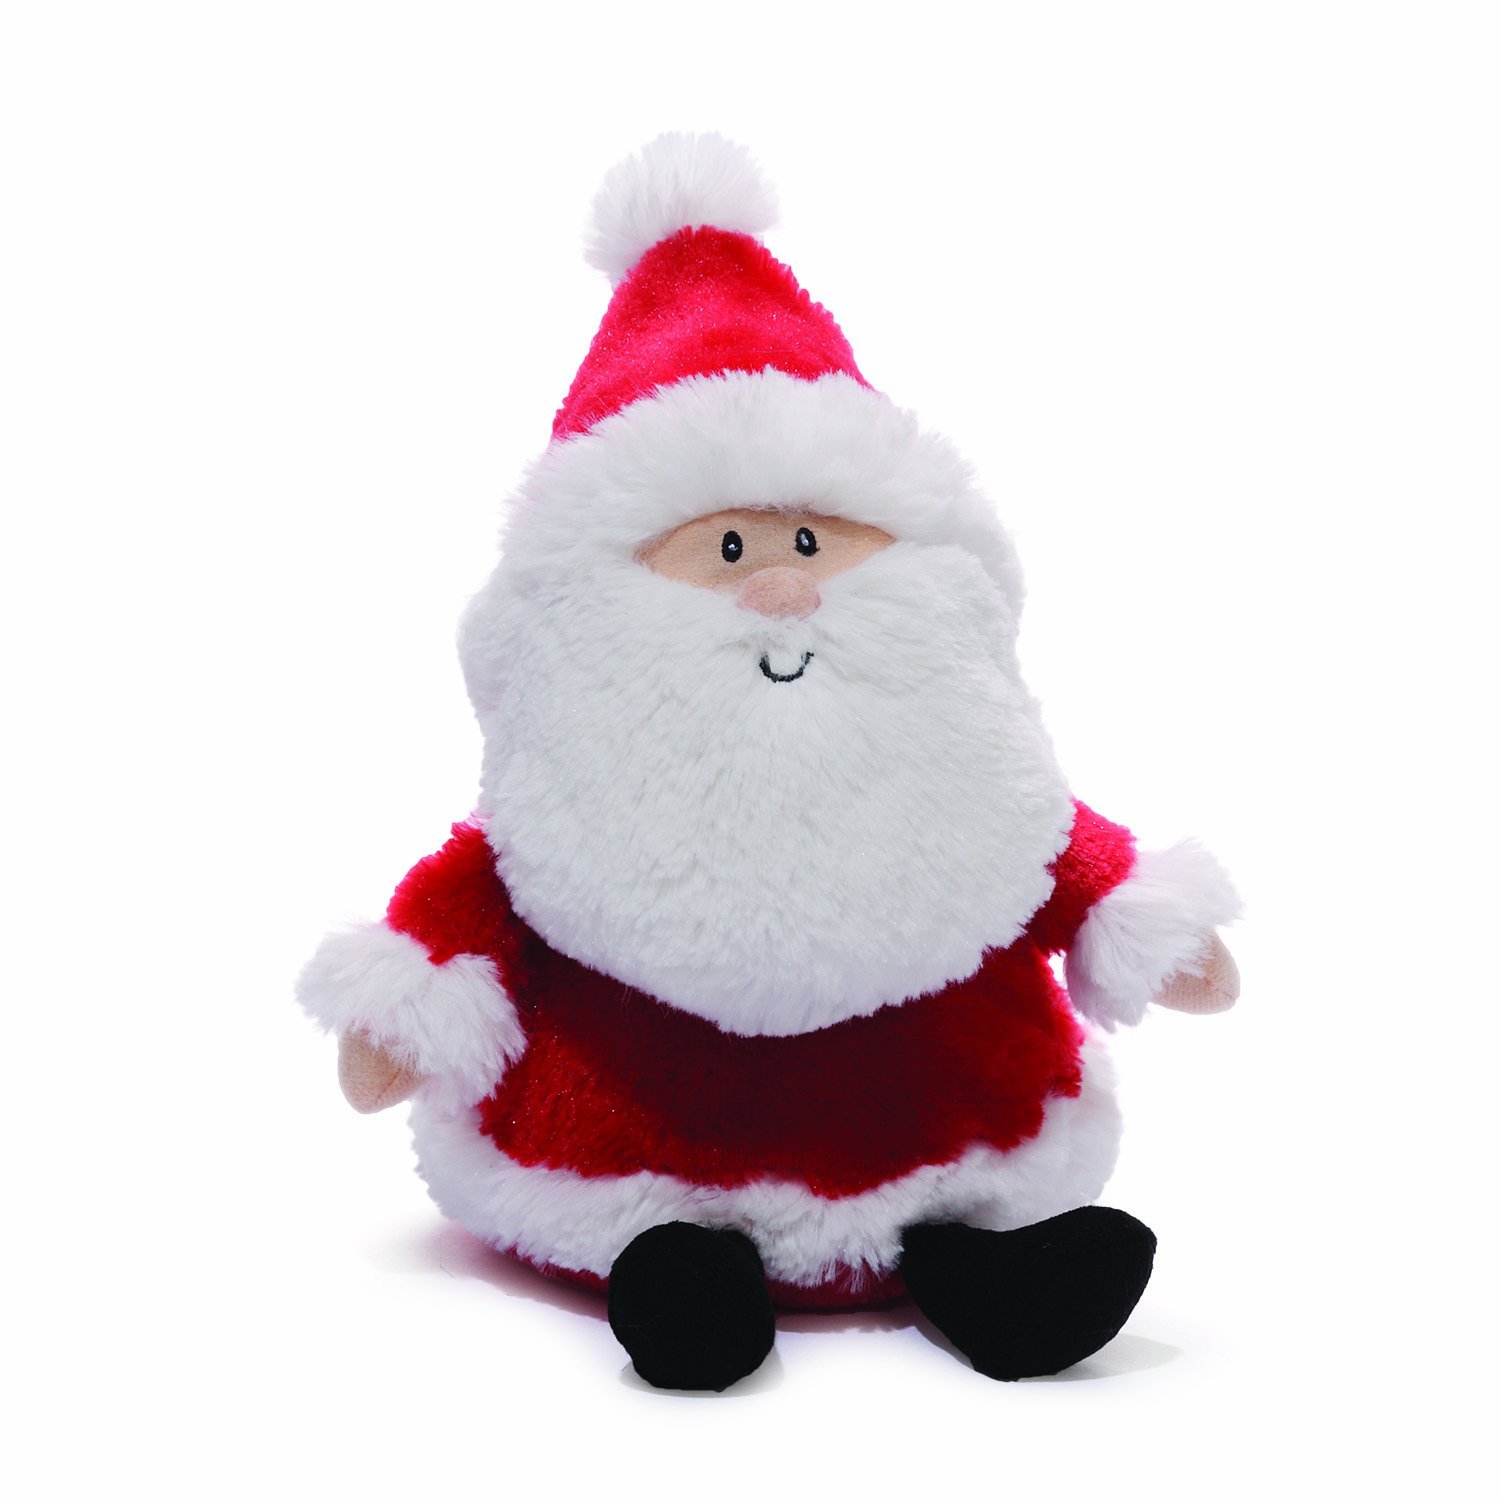 Amazon.com: Gund Christmas Santa Clause Plush: Toys & Games